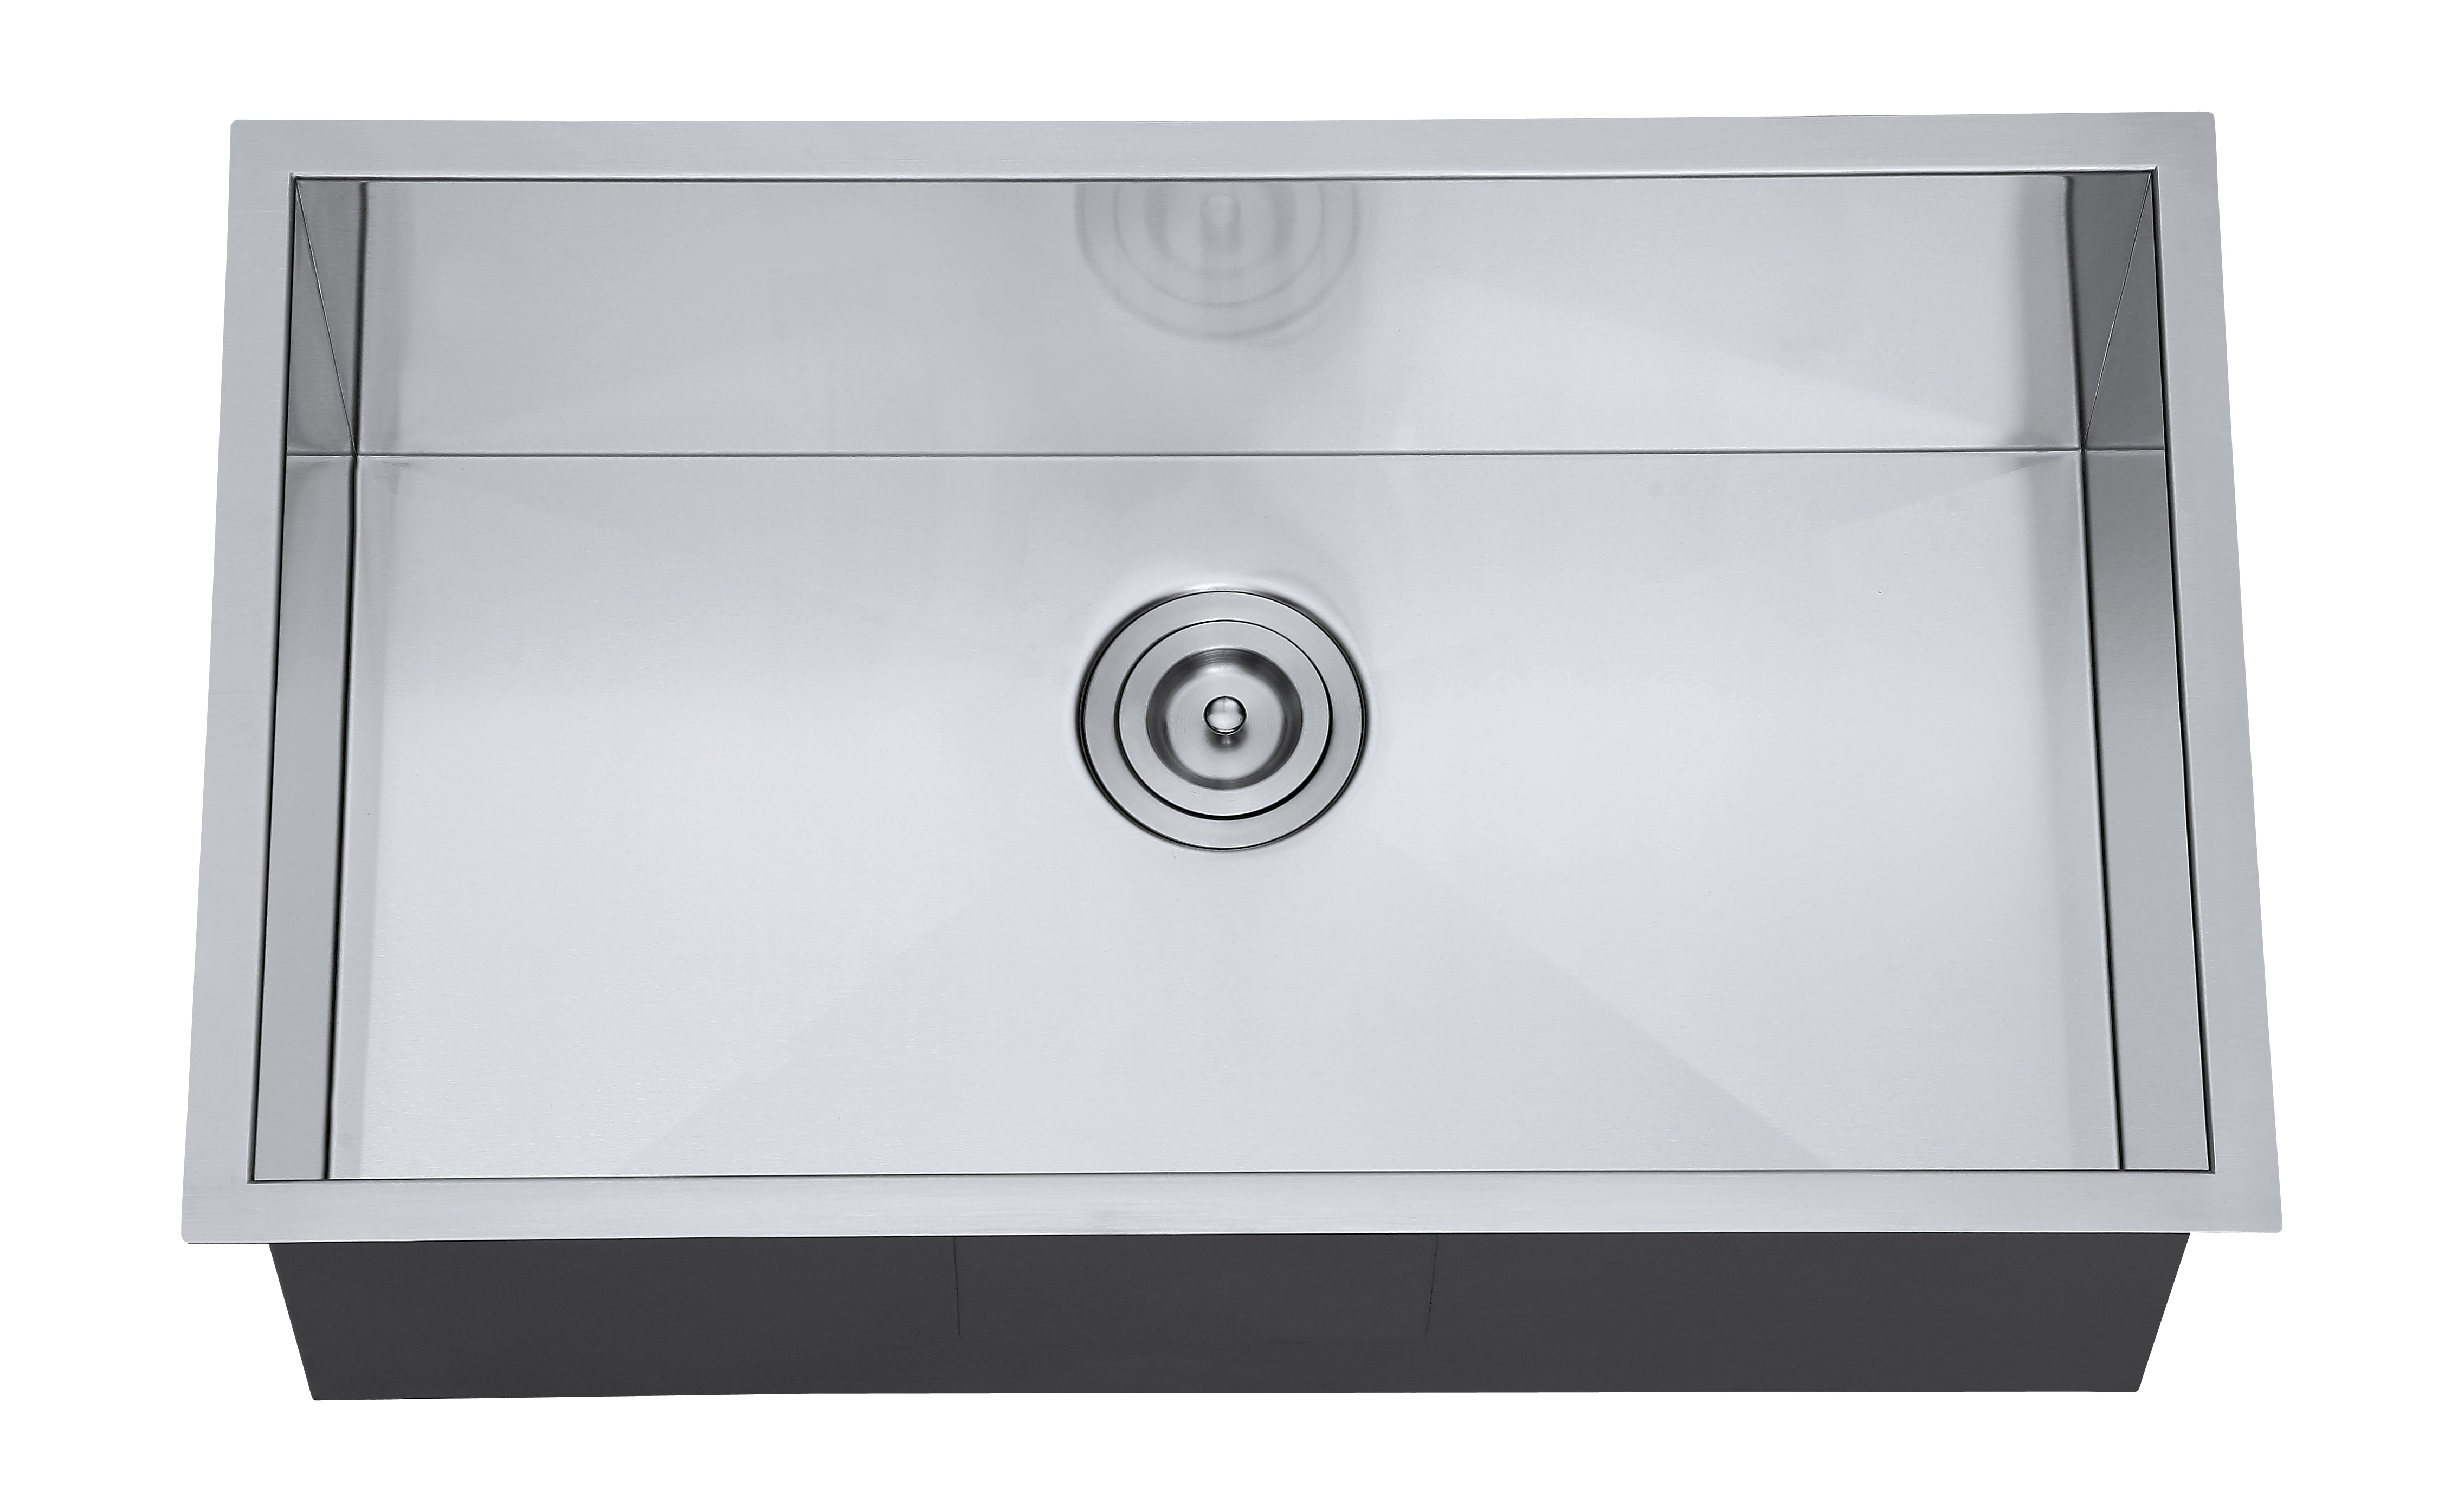 DAX Single Bowl Undermount Kitchen Sink, 18 Gauge Stainless Steel, Brushed Finish , 30 x 18 x 10 Inches (DAX-SQ-3018-X)